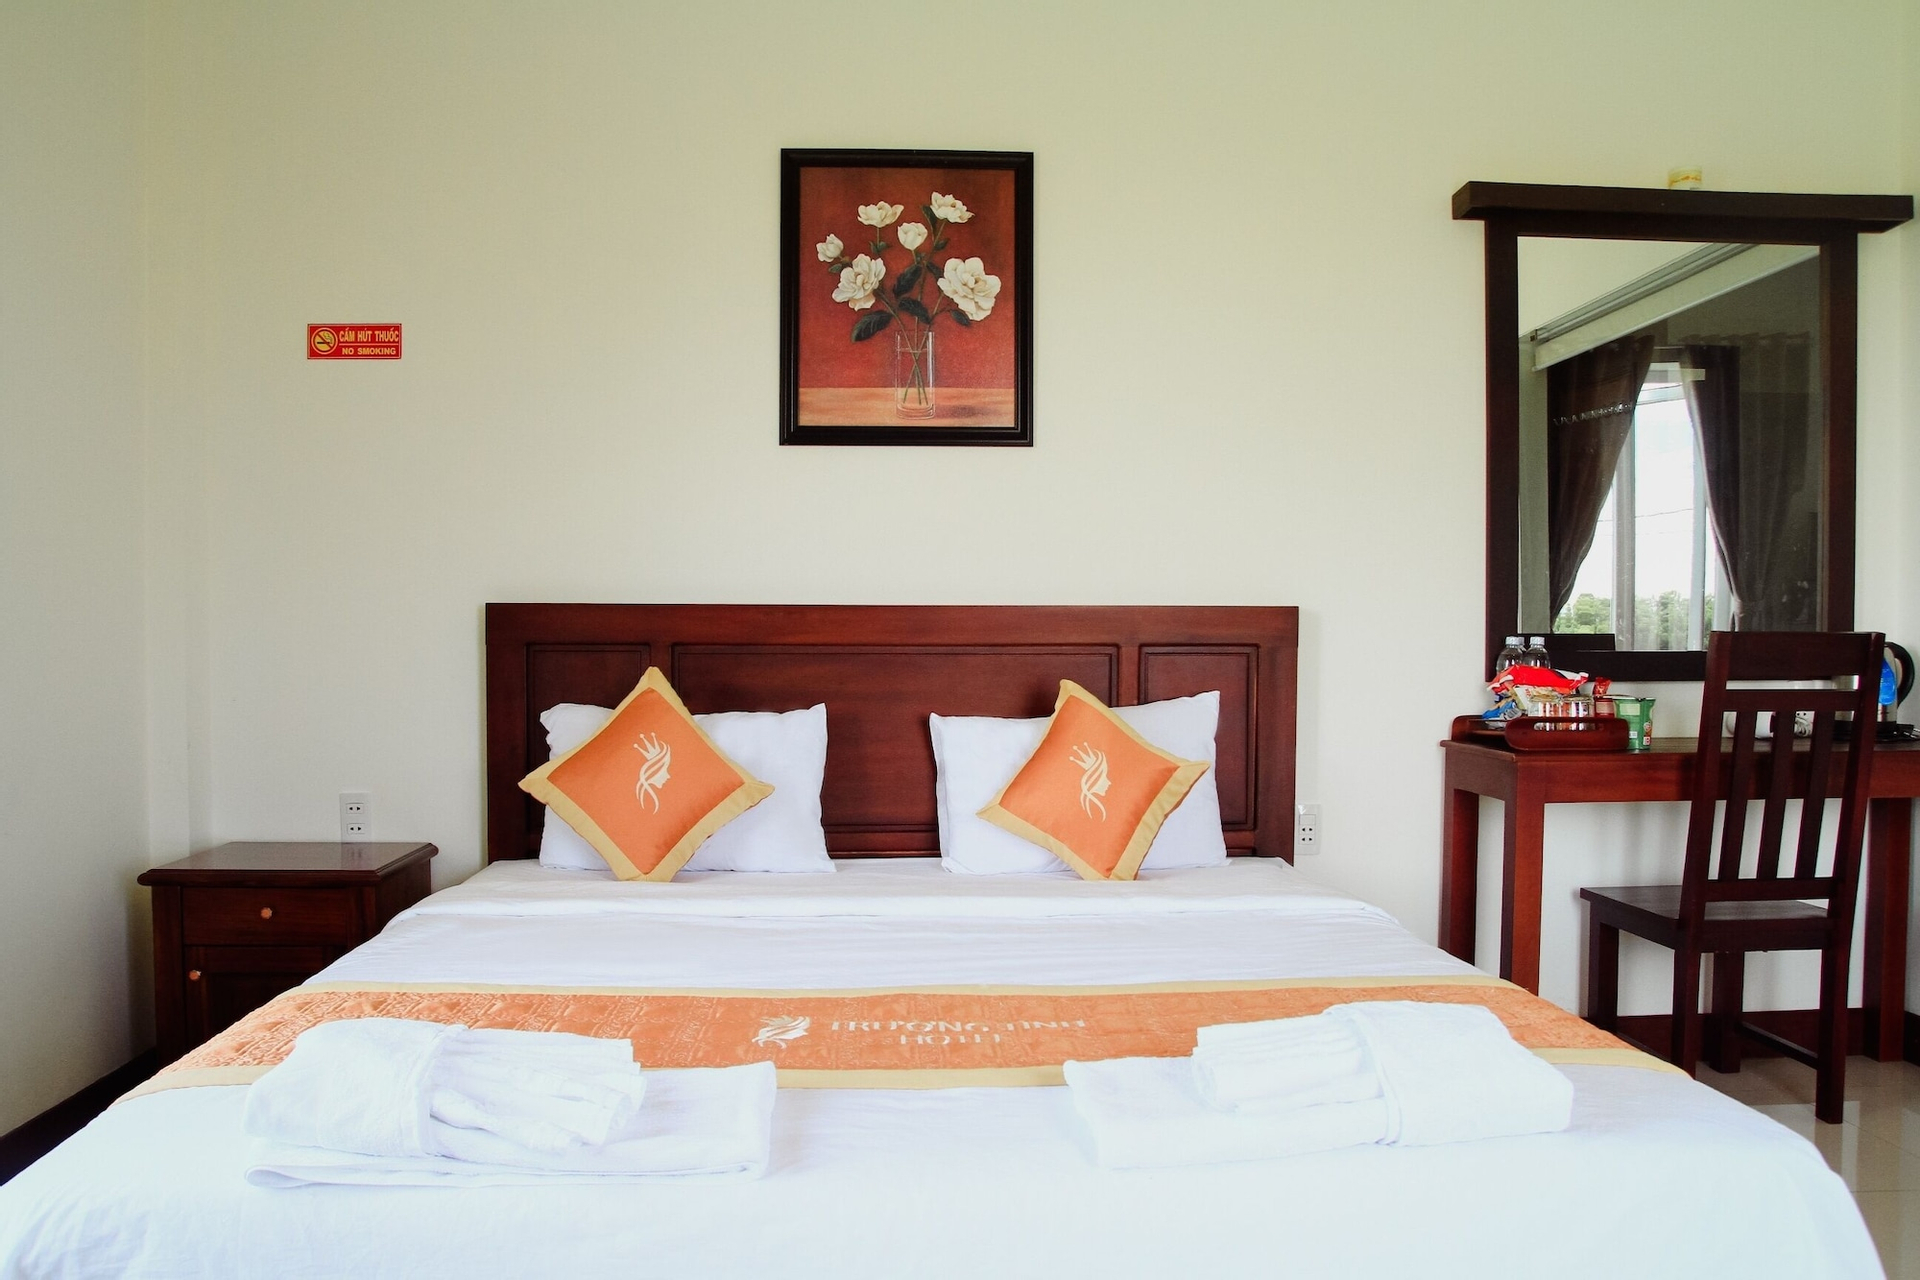 Bedroom 3, TRUONG TINH HOTEL, Quảng Điền